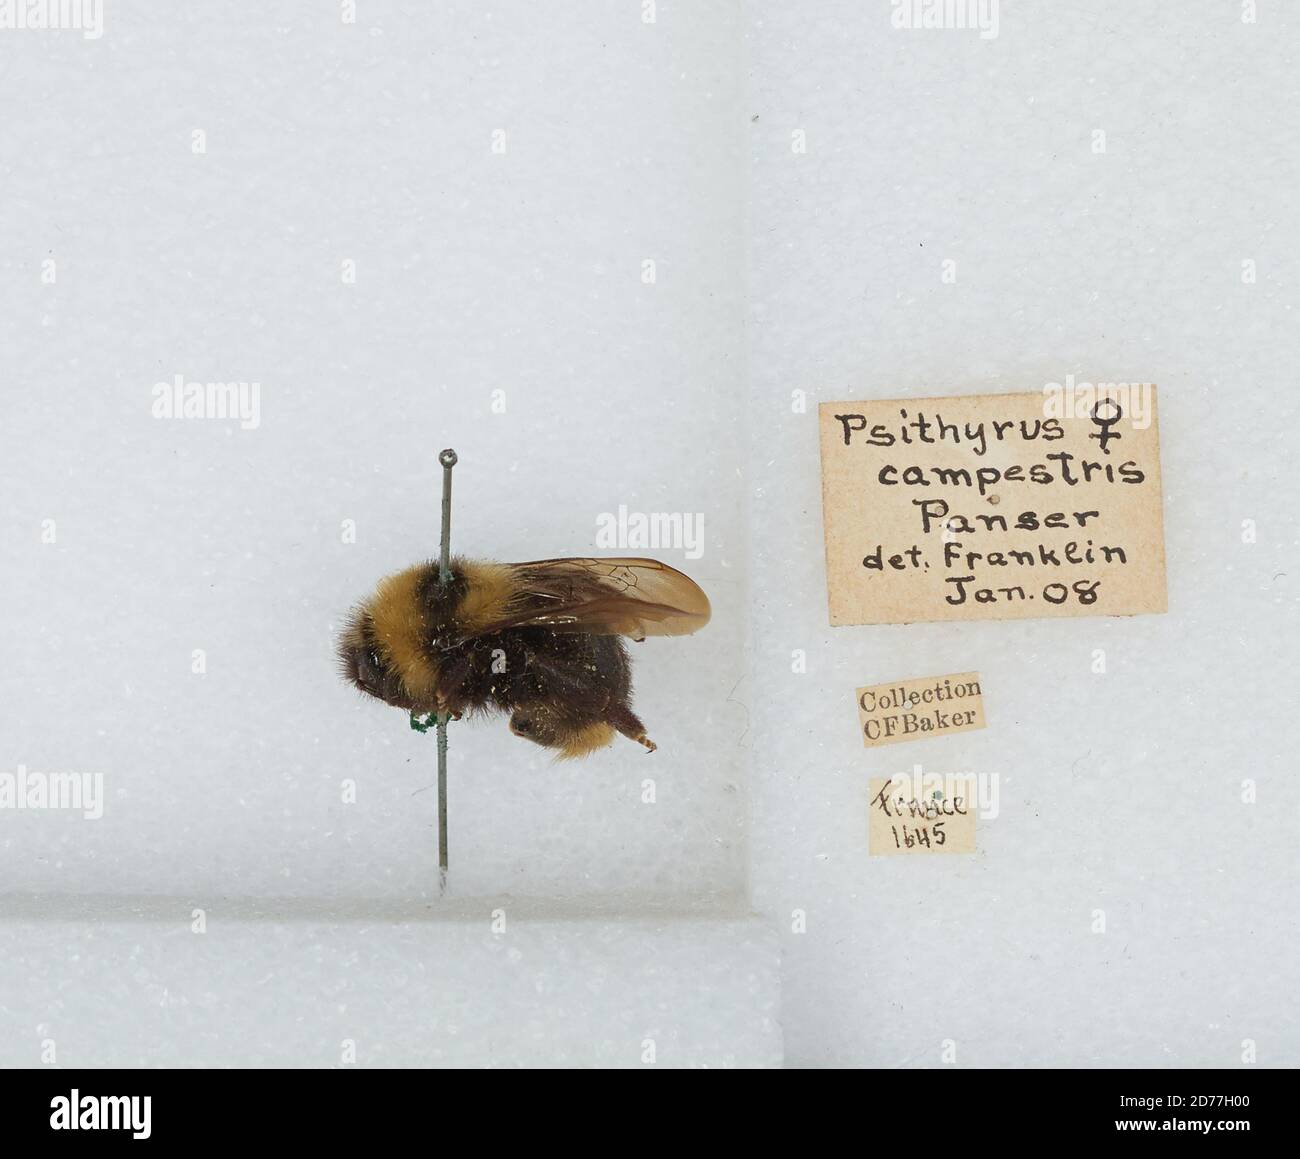 France, Bombus (Psithyrus) campestris Panzer, Animalia, Arthropoda, Insecta, Hymenoptera, Apidae, Apinae Stock Photo